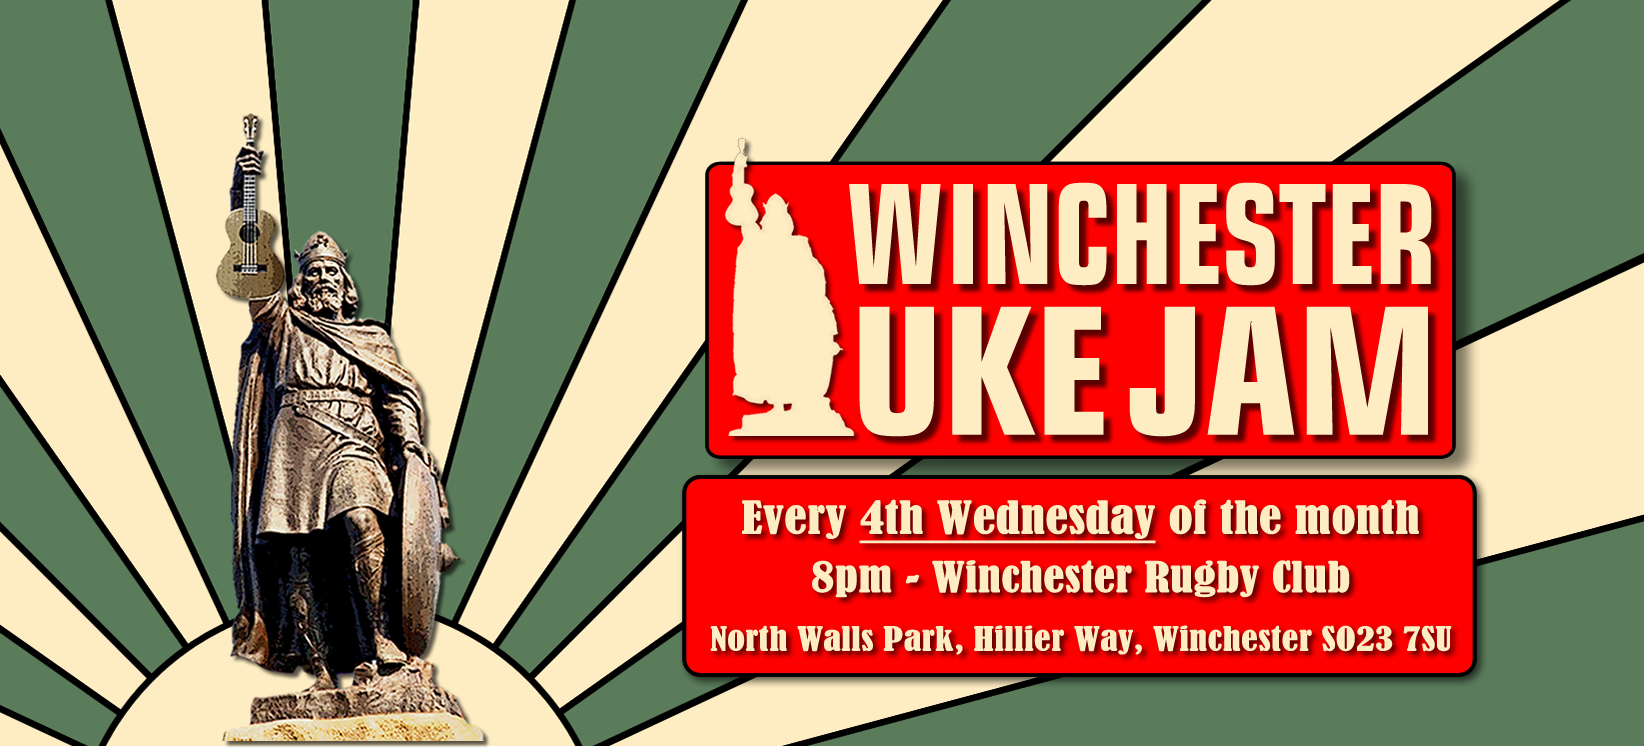 Winchester Uke Jam